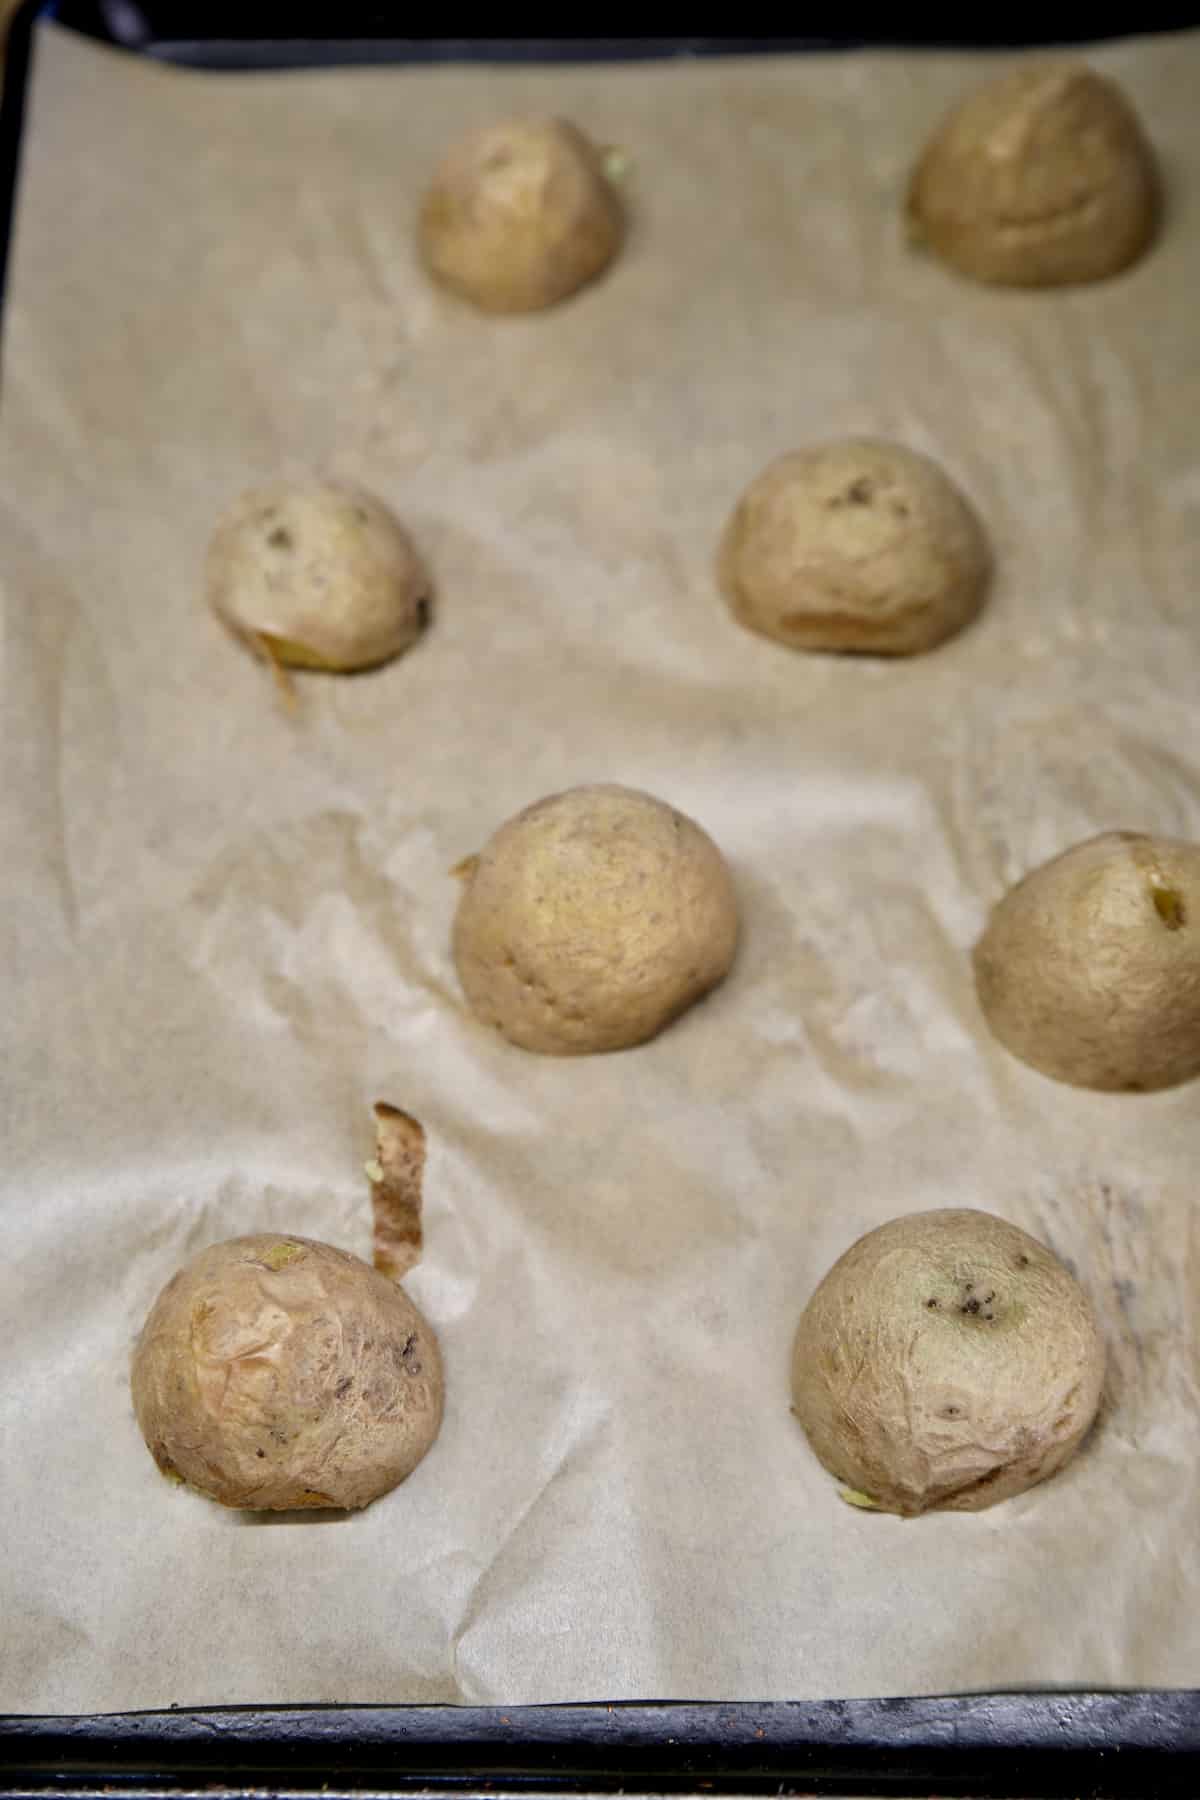 Yukon gold potatoes cut in half on a lined baking sheet.